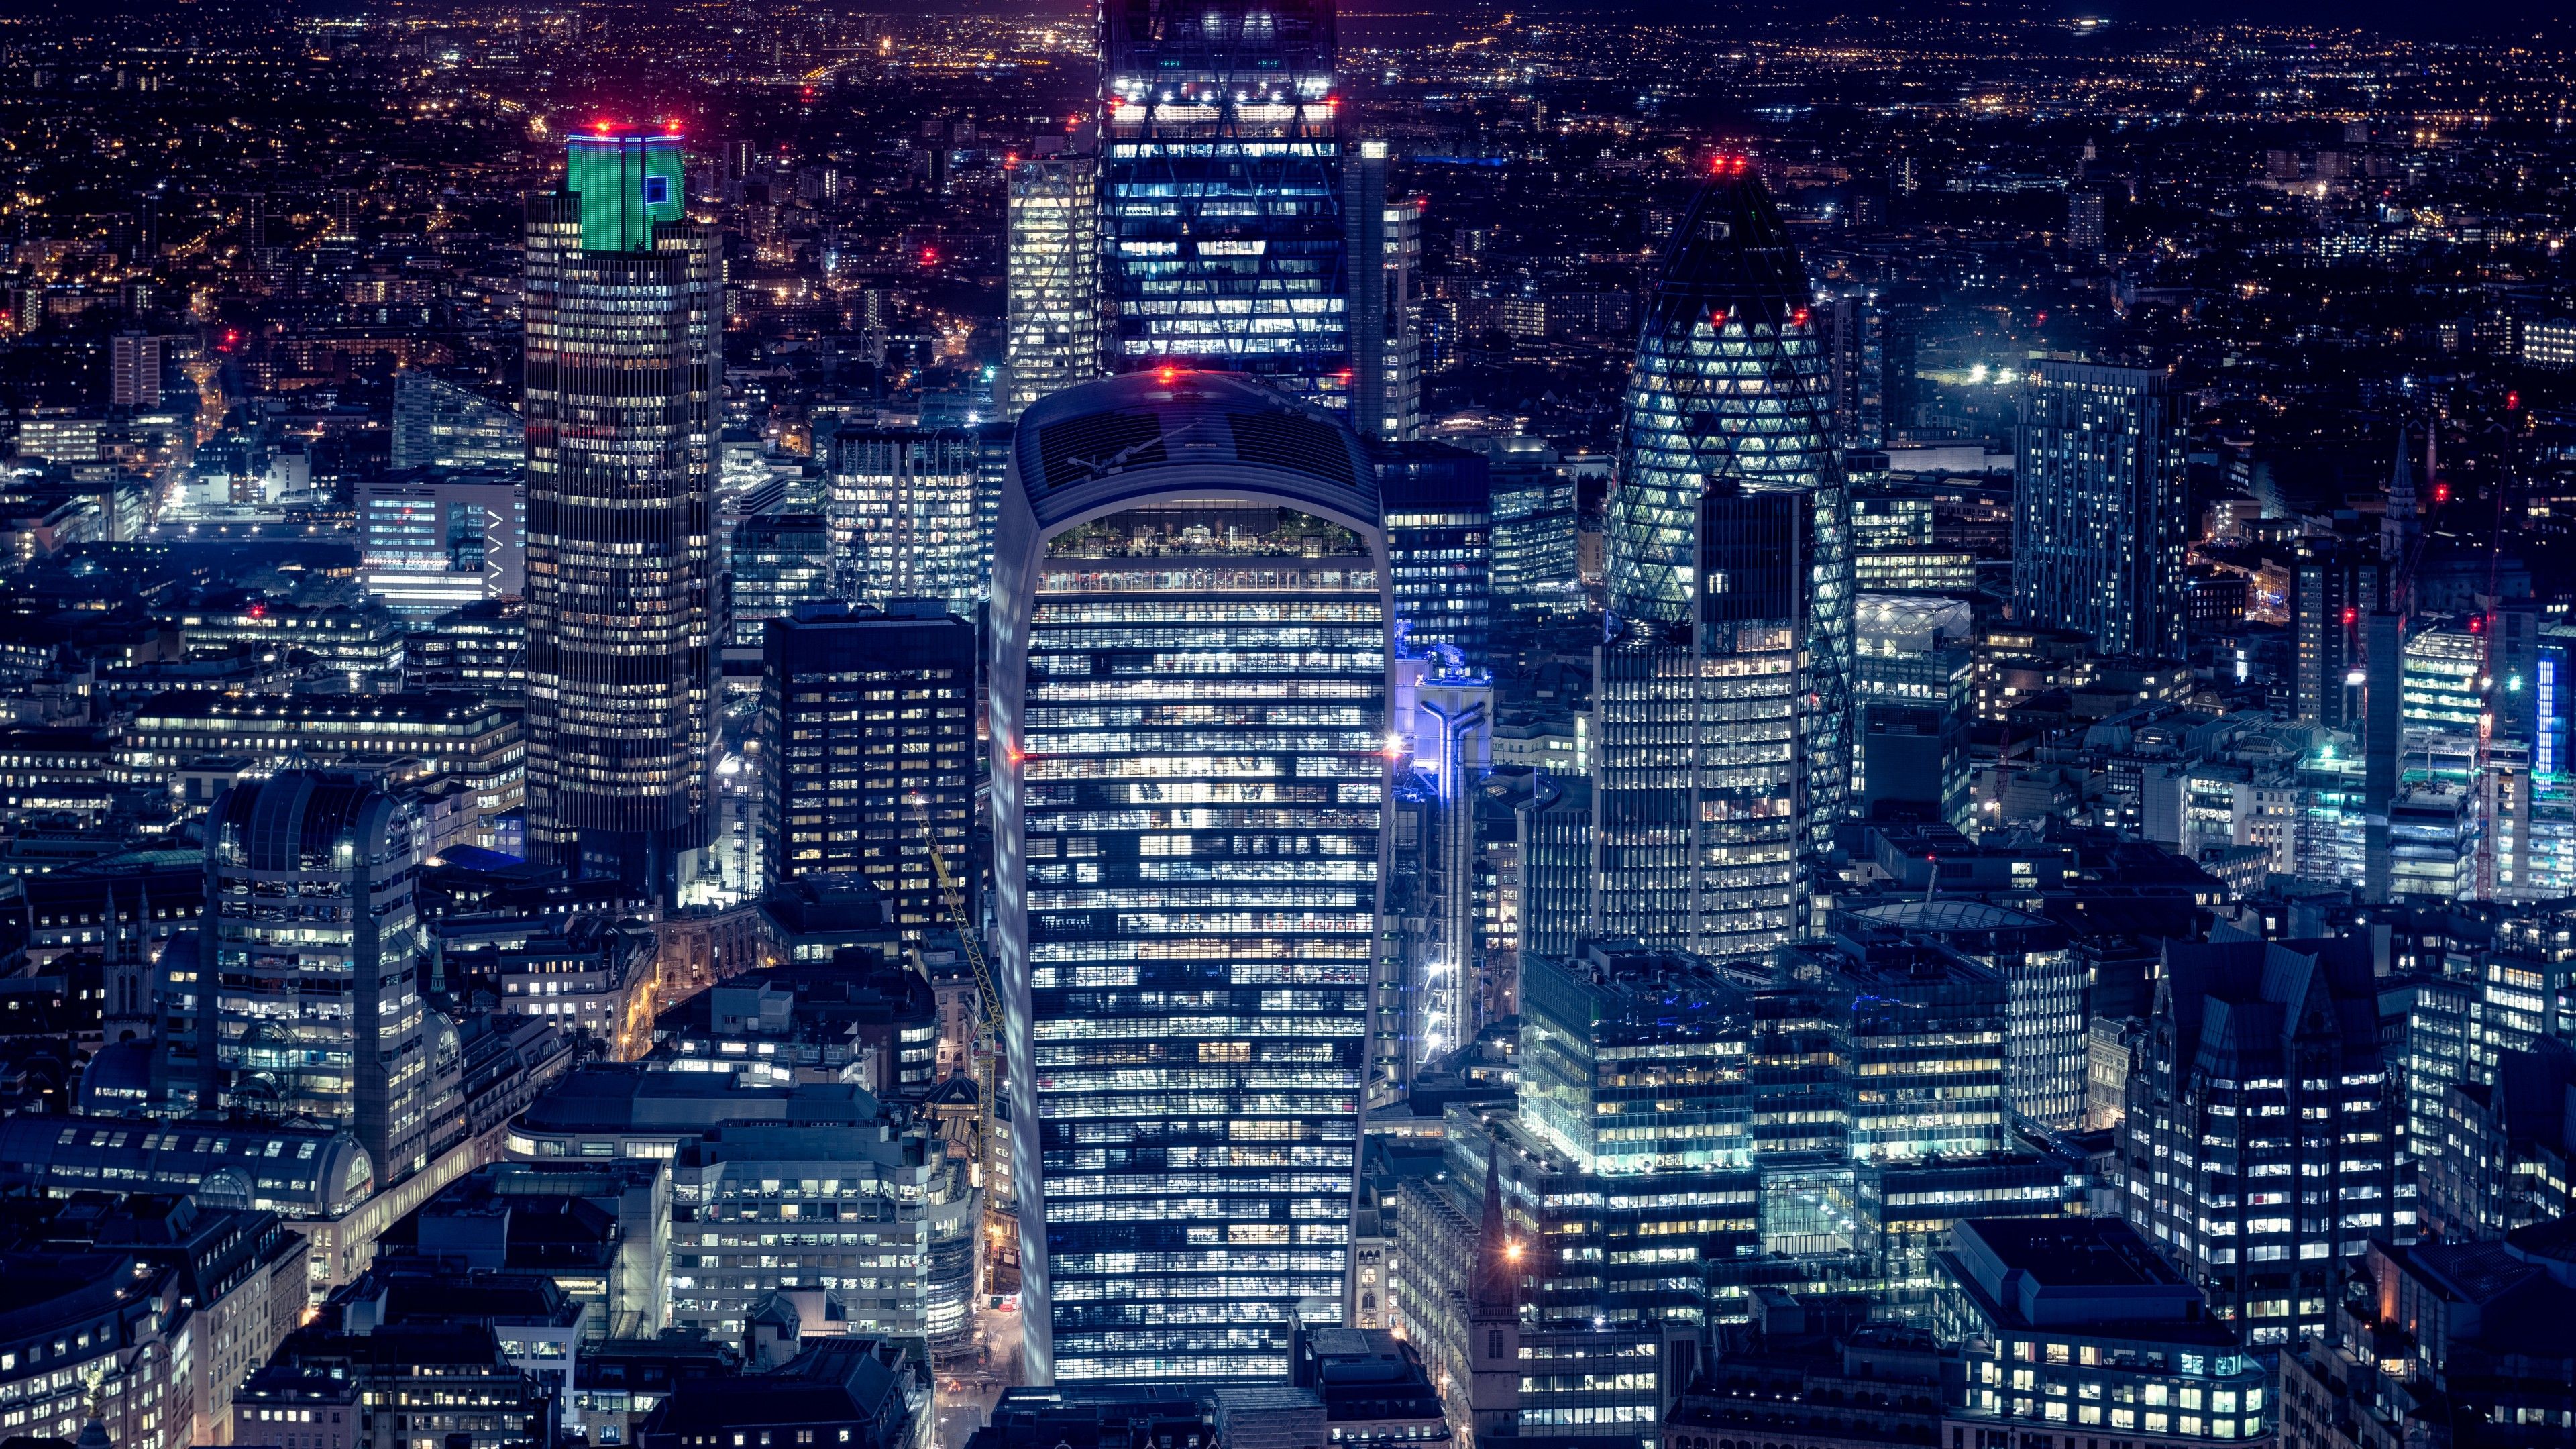 London City 4K Wallpaper, Cityscape, Night lights, Skyscrapers, Tower Gherkin, Heron Tower, World